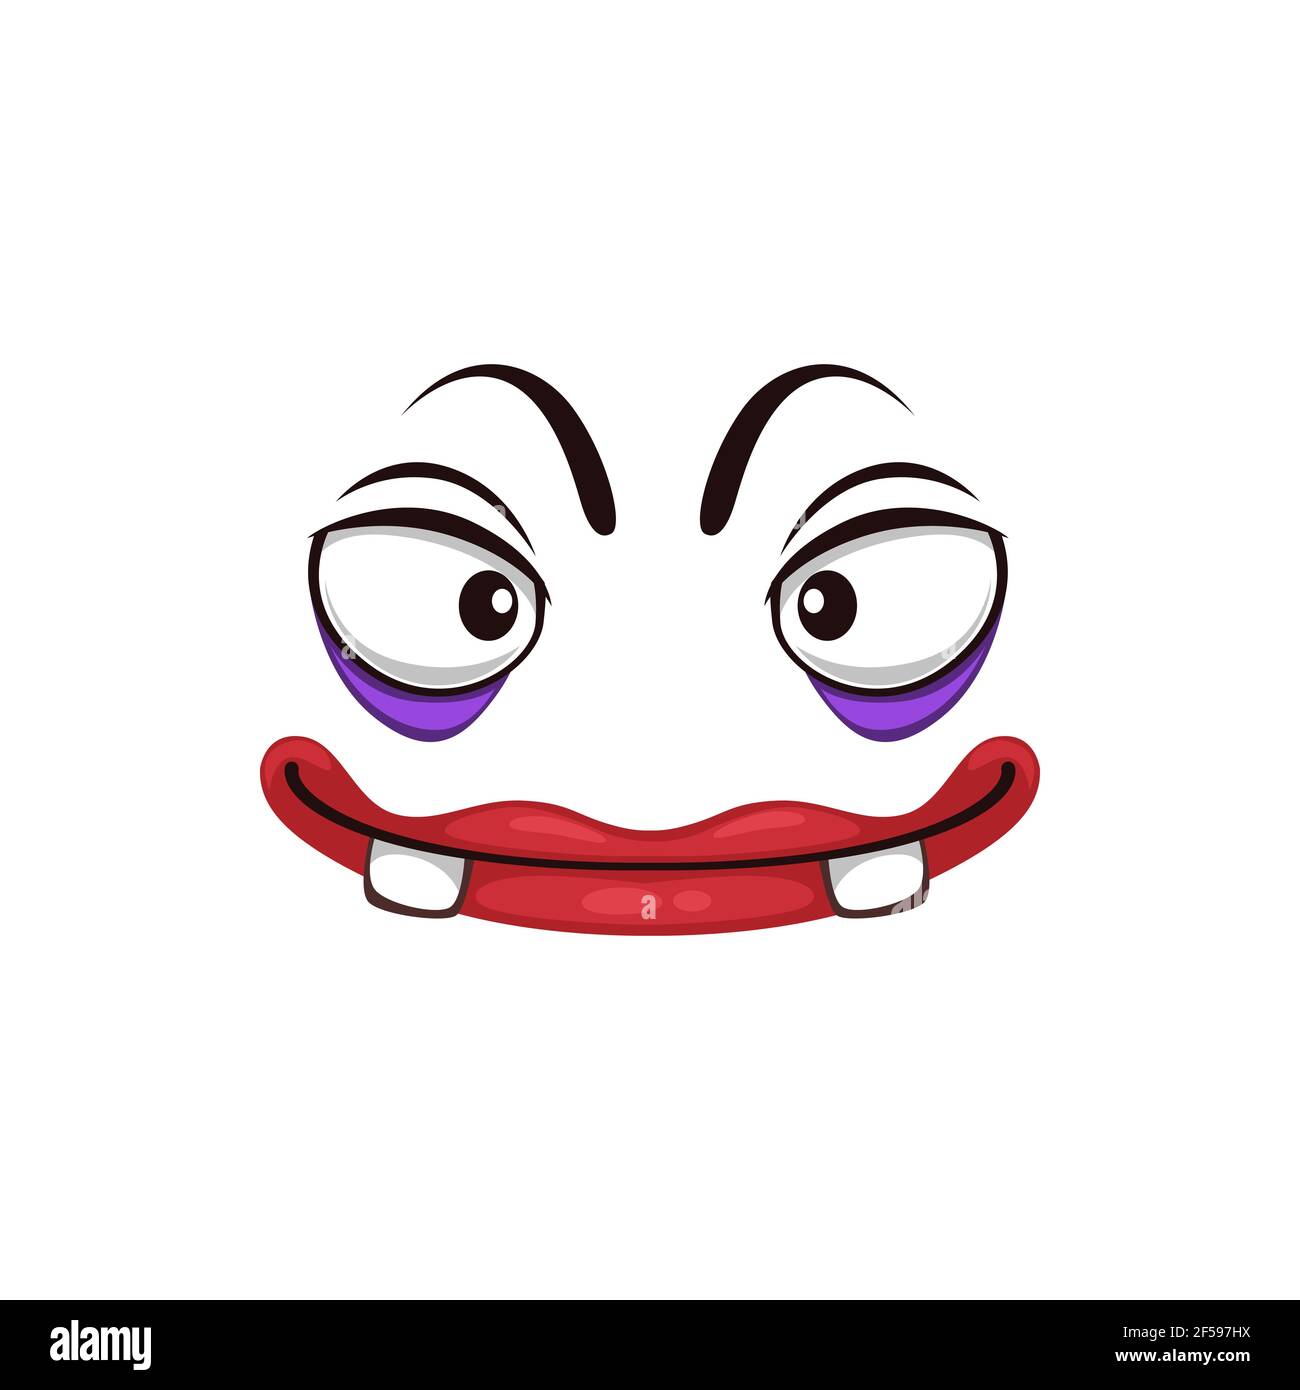 Image Details INH_18984_61429 - Cartoon face with slanting eyes